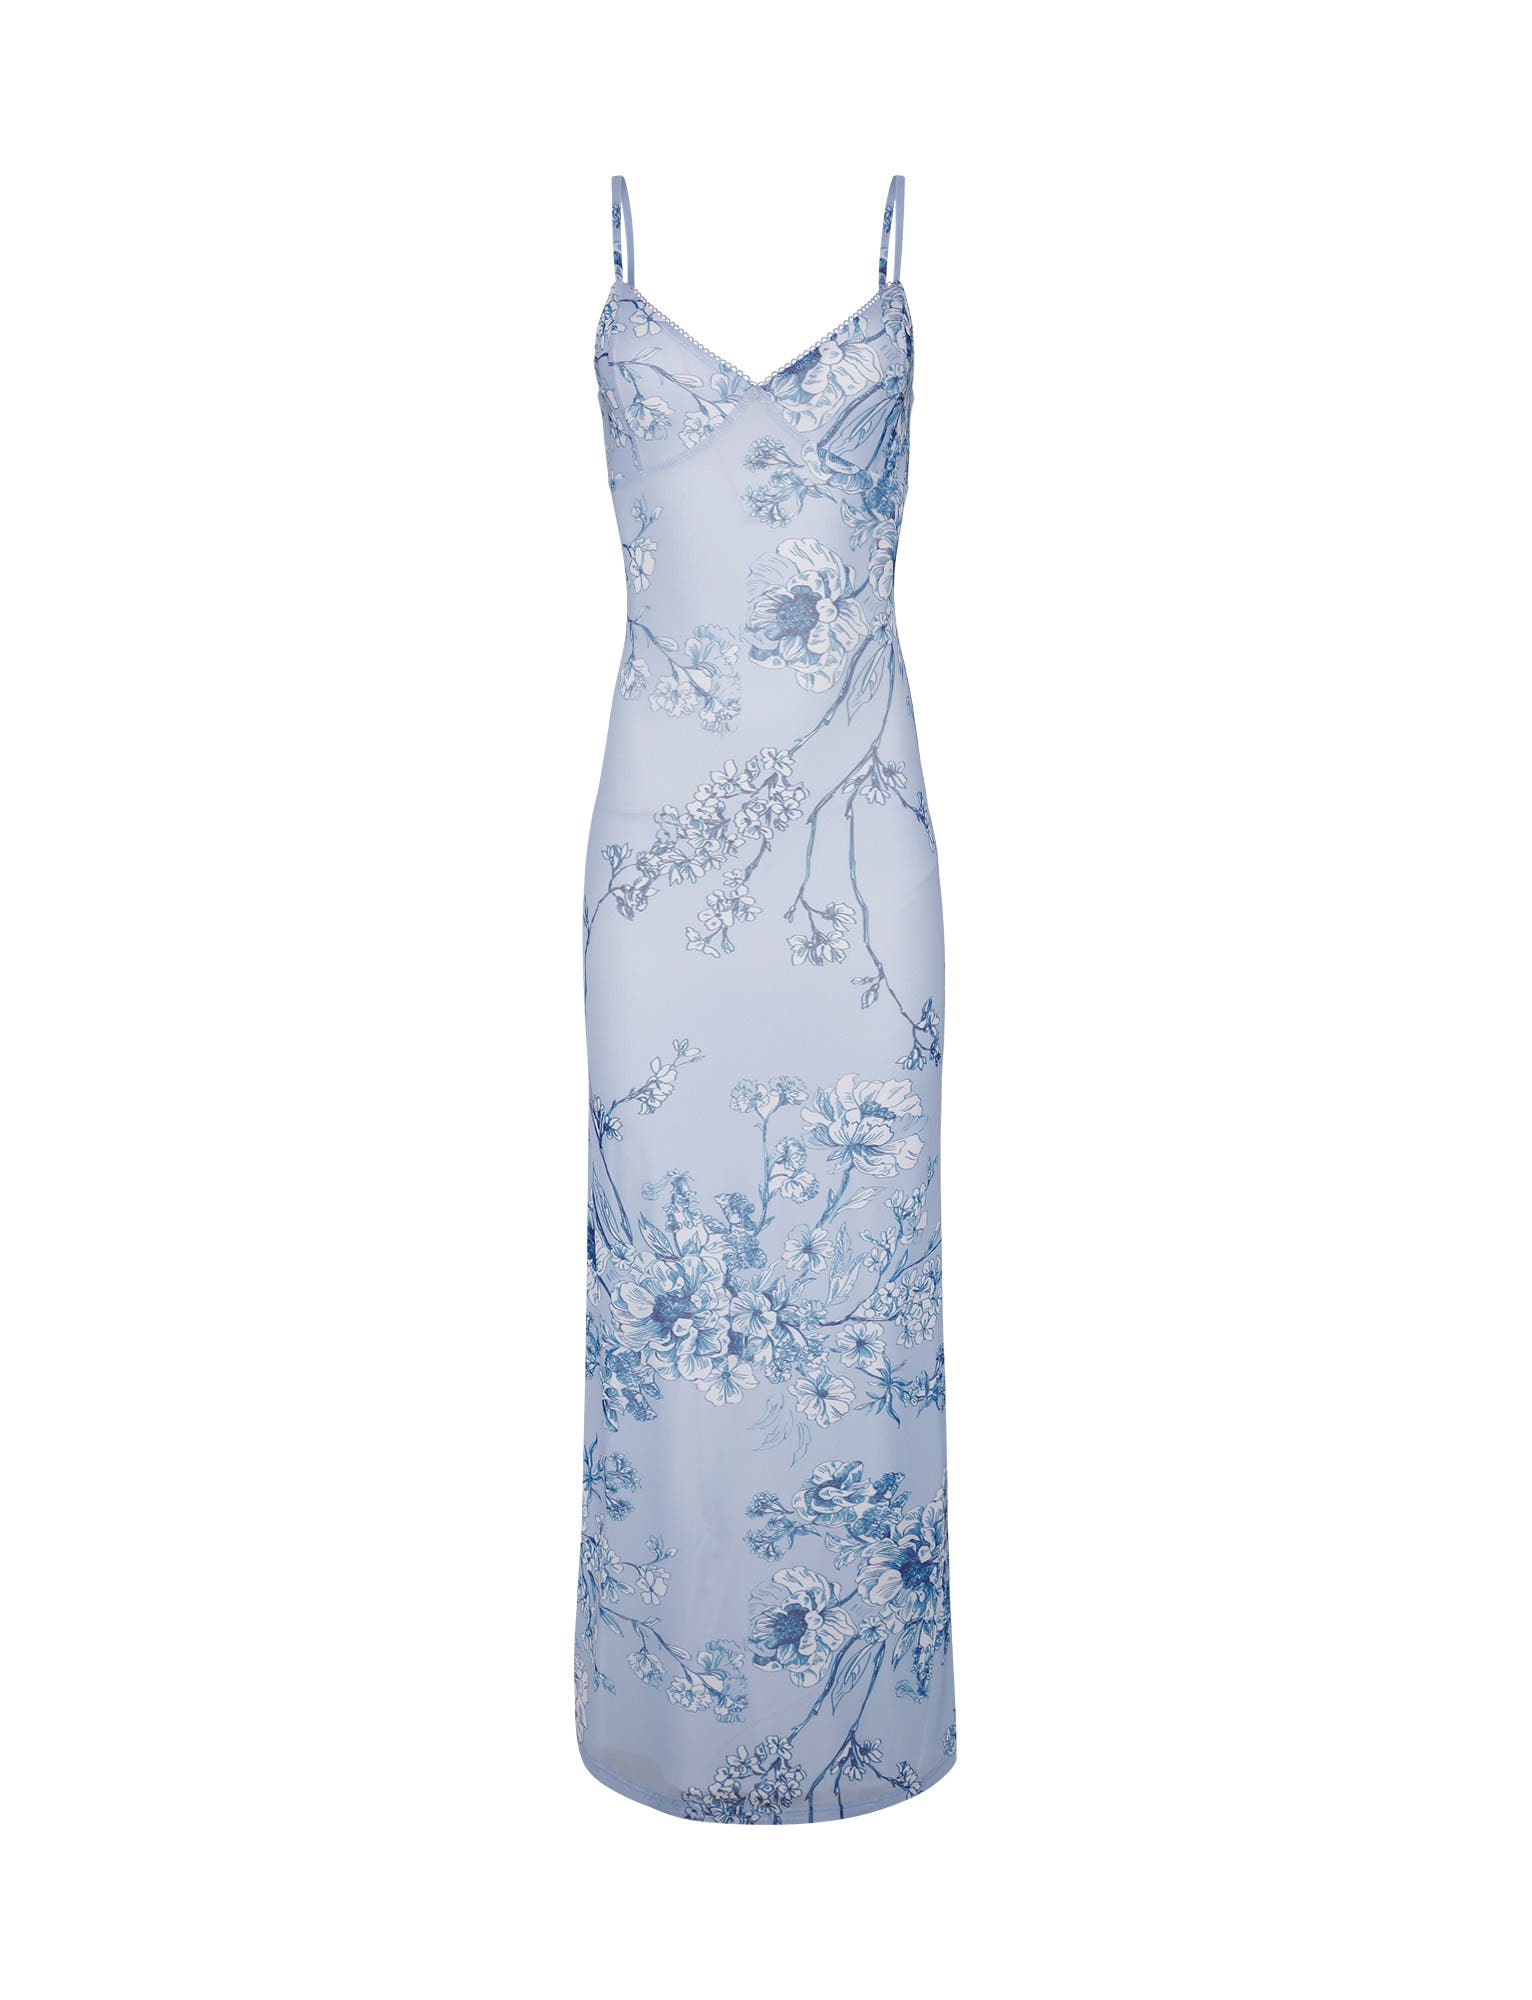 JULIANNA DRESS - BLUE : FLORAL : CERAMIC FLORAL